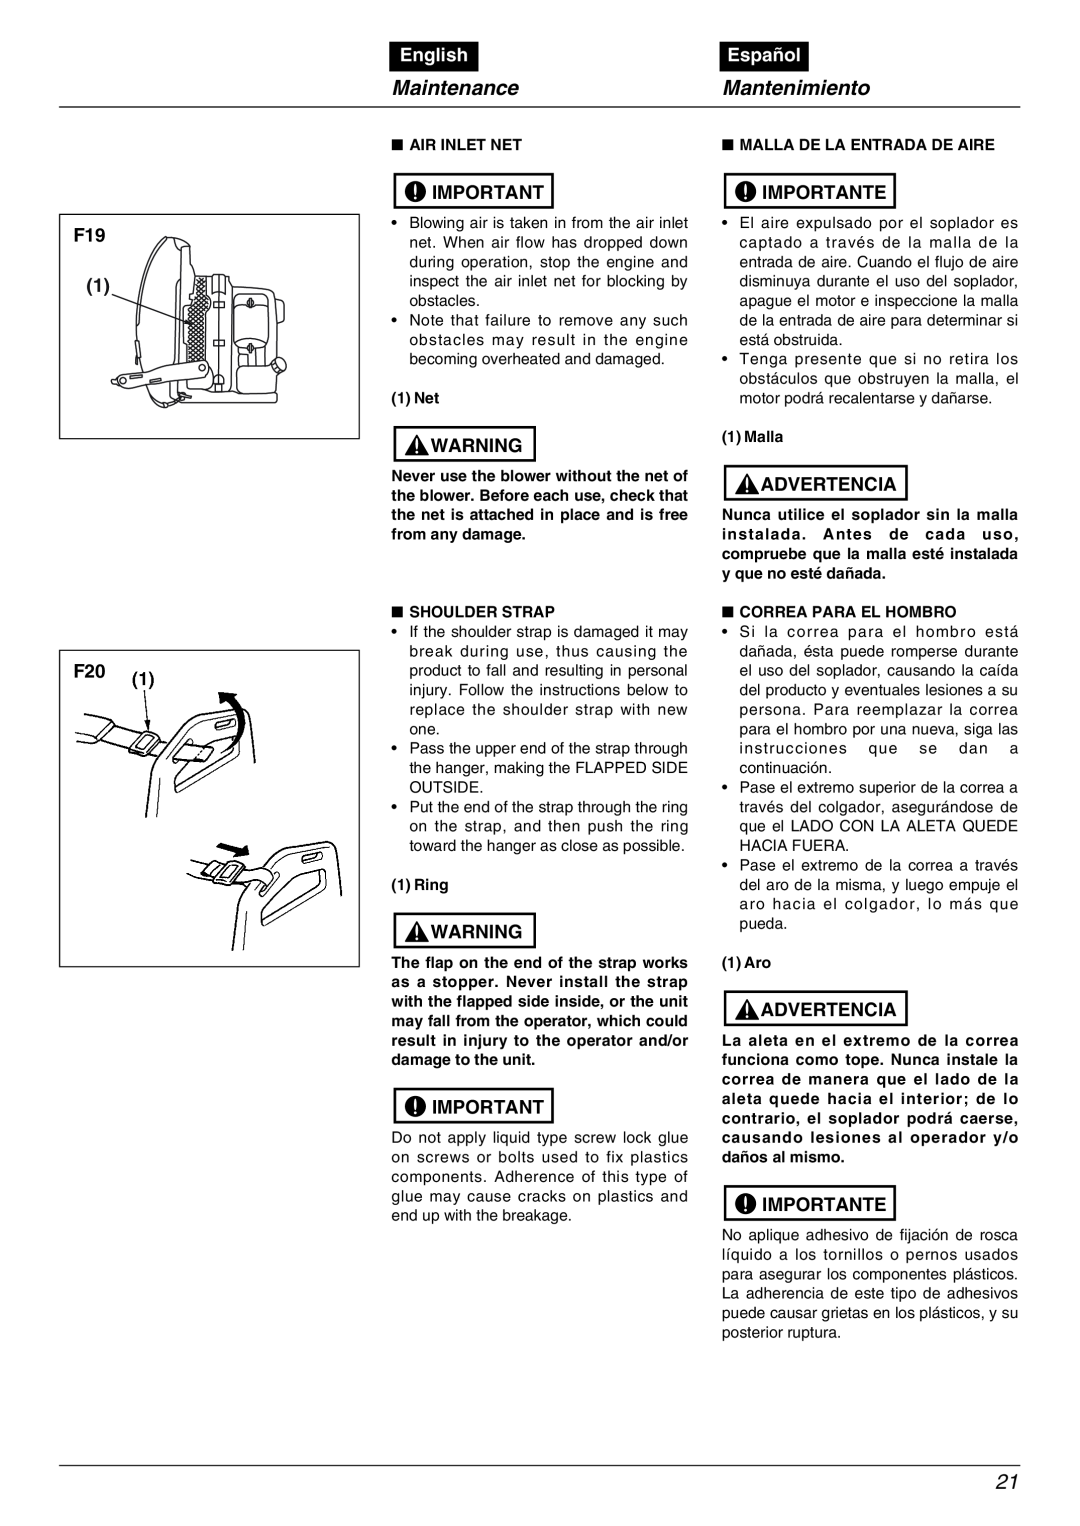 RedMax EBZ5000RH manual Maintenance, Mantenimiento, F19, English, Español, Importante, Advertencia 